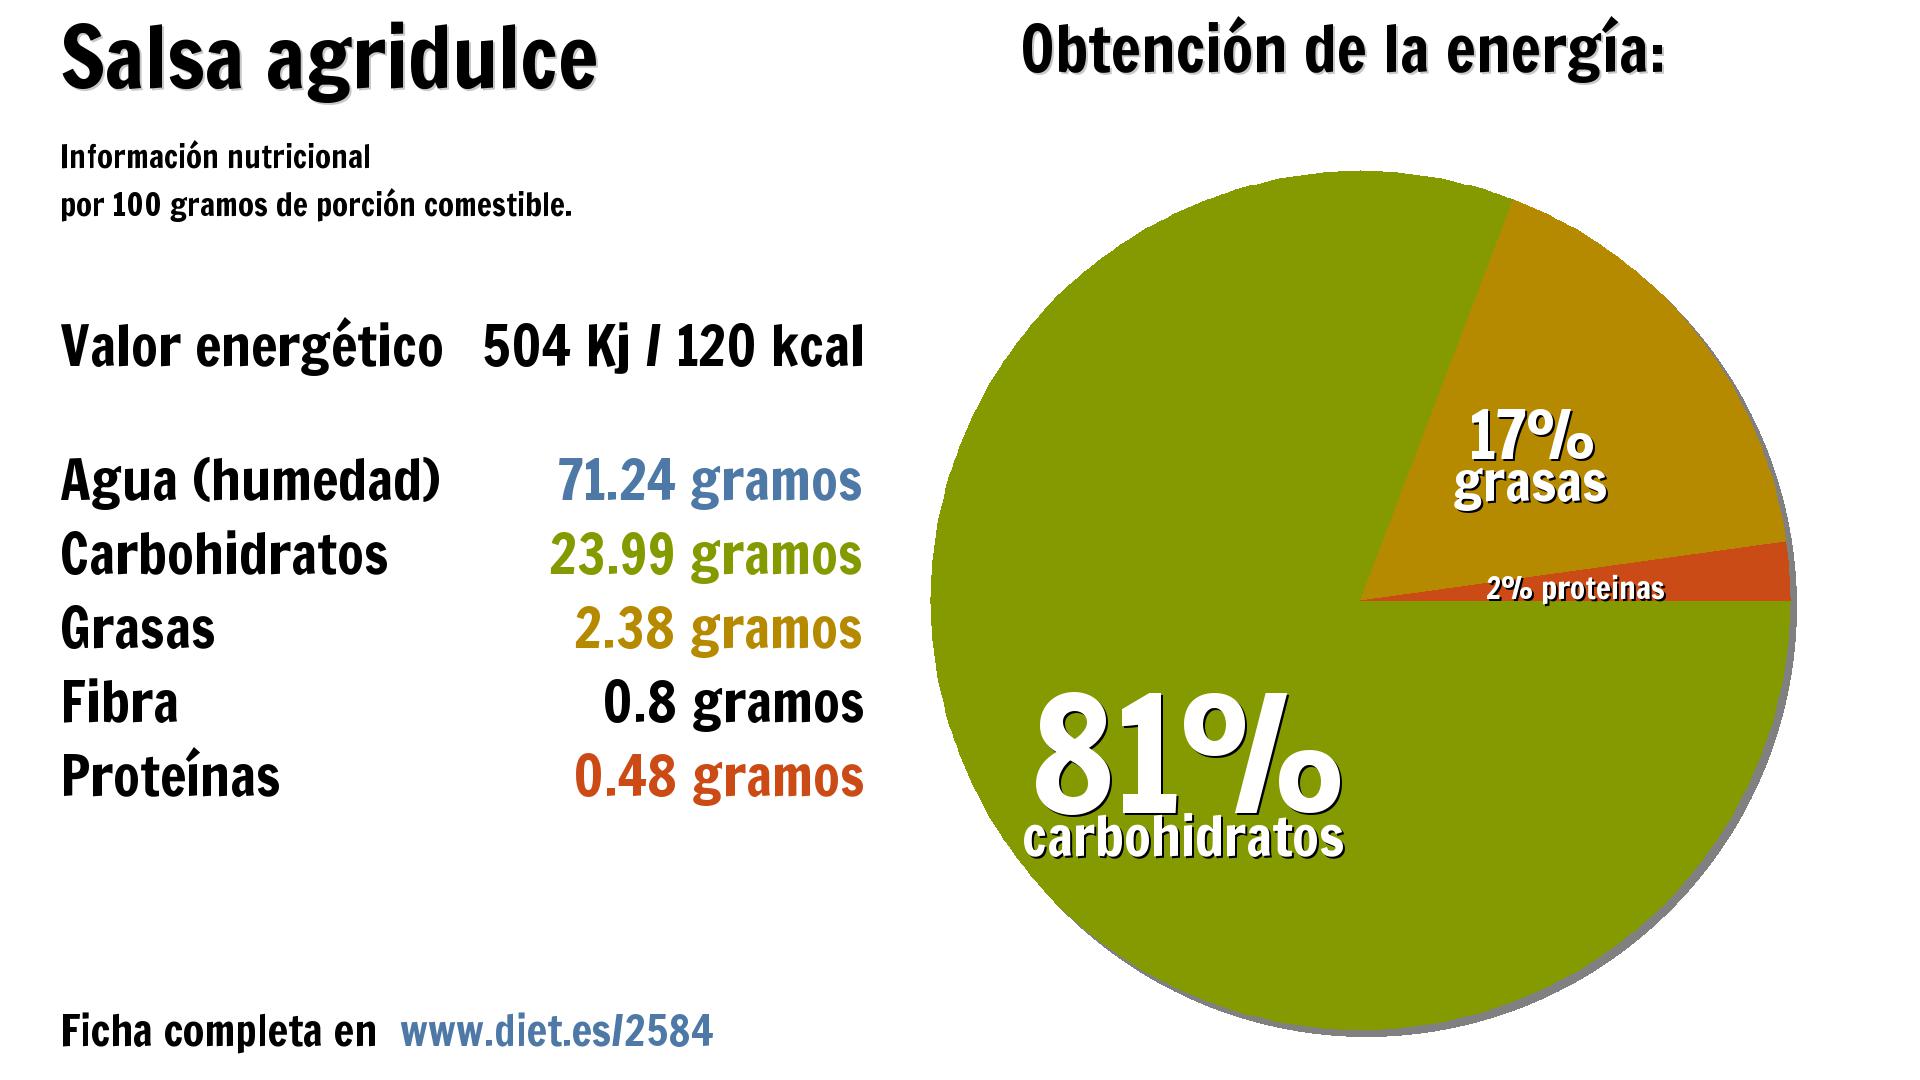 Salsa agridulce: energía 504 Kj, agua 71 g., carbohidratos 24 g., grasas 2 g. y fibra 1 g.